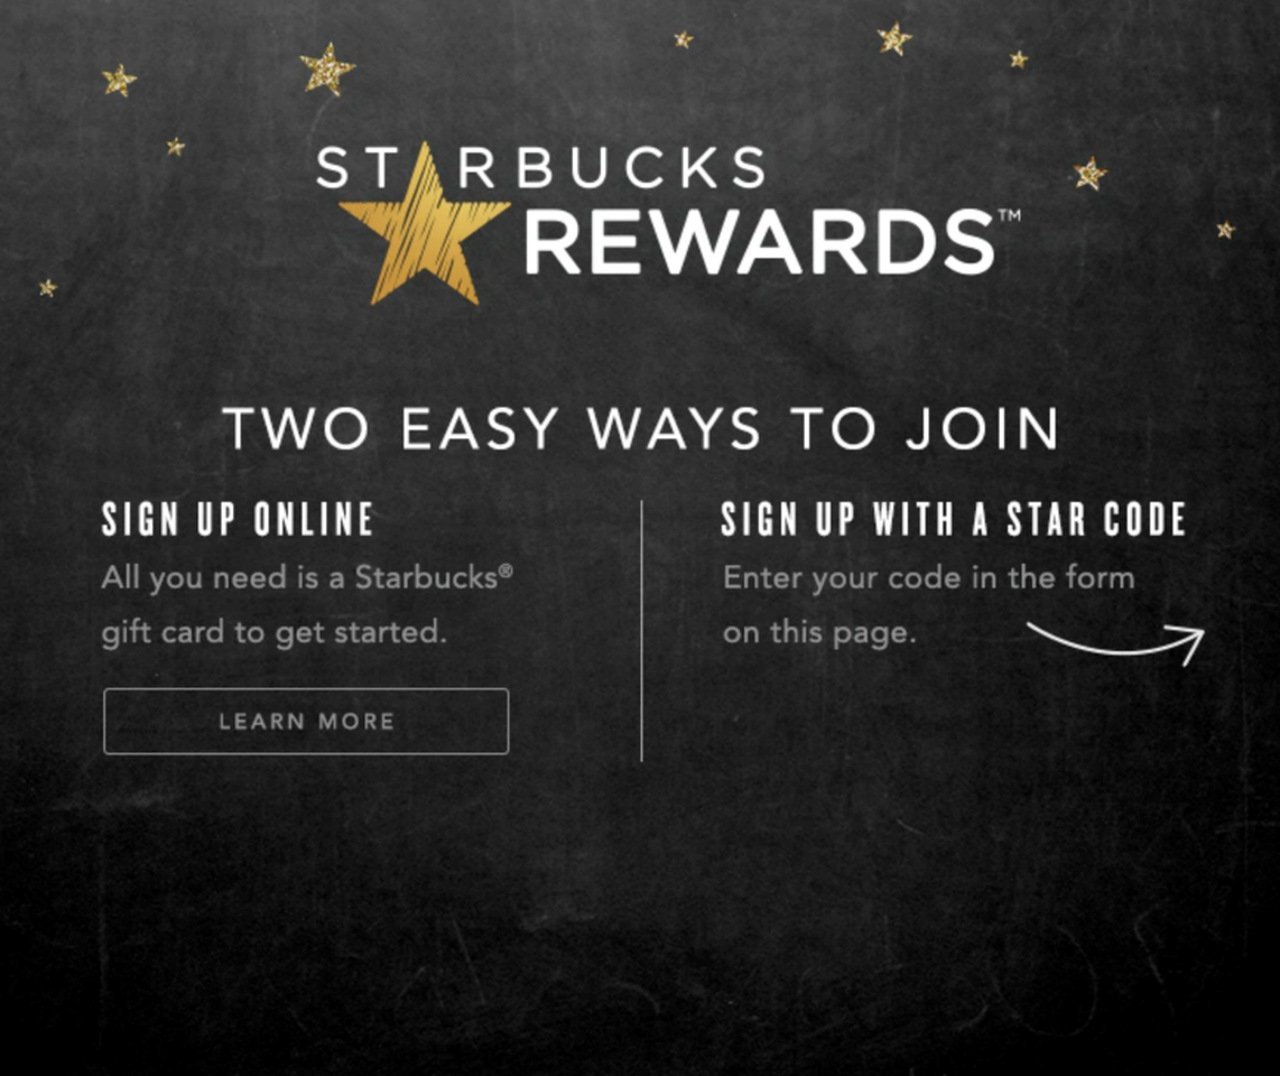 Starbucks rewards system